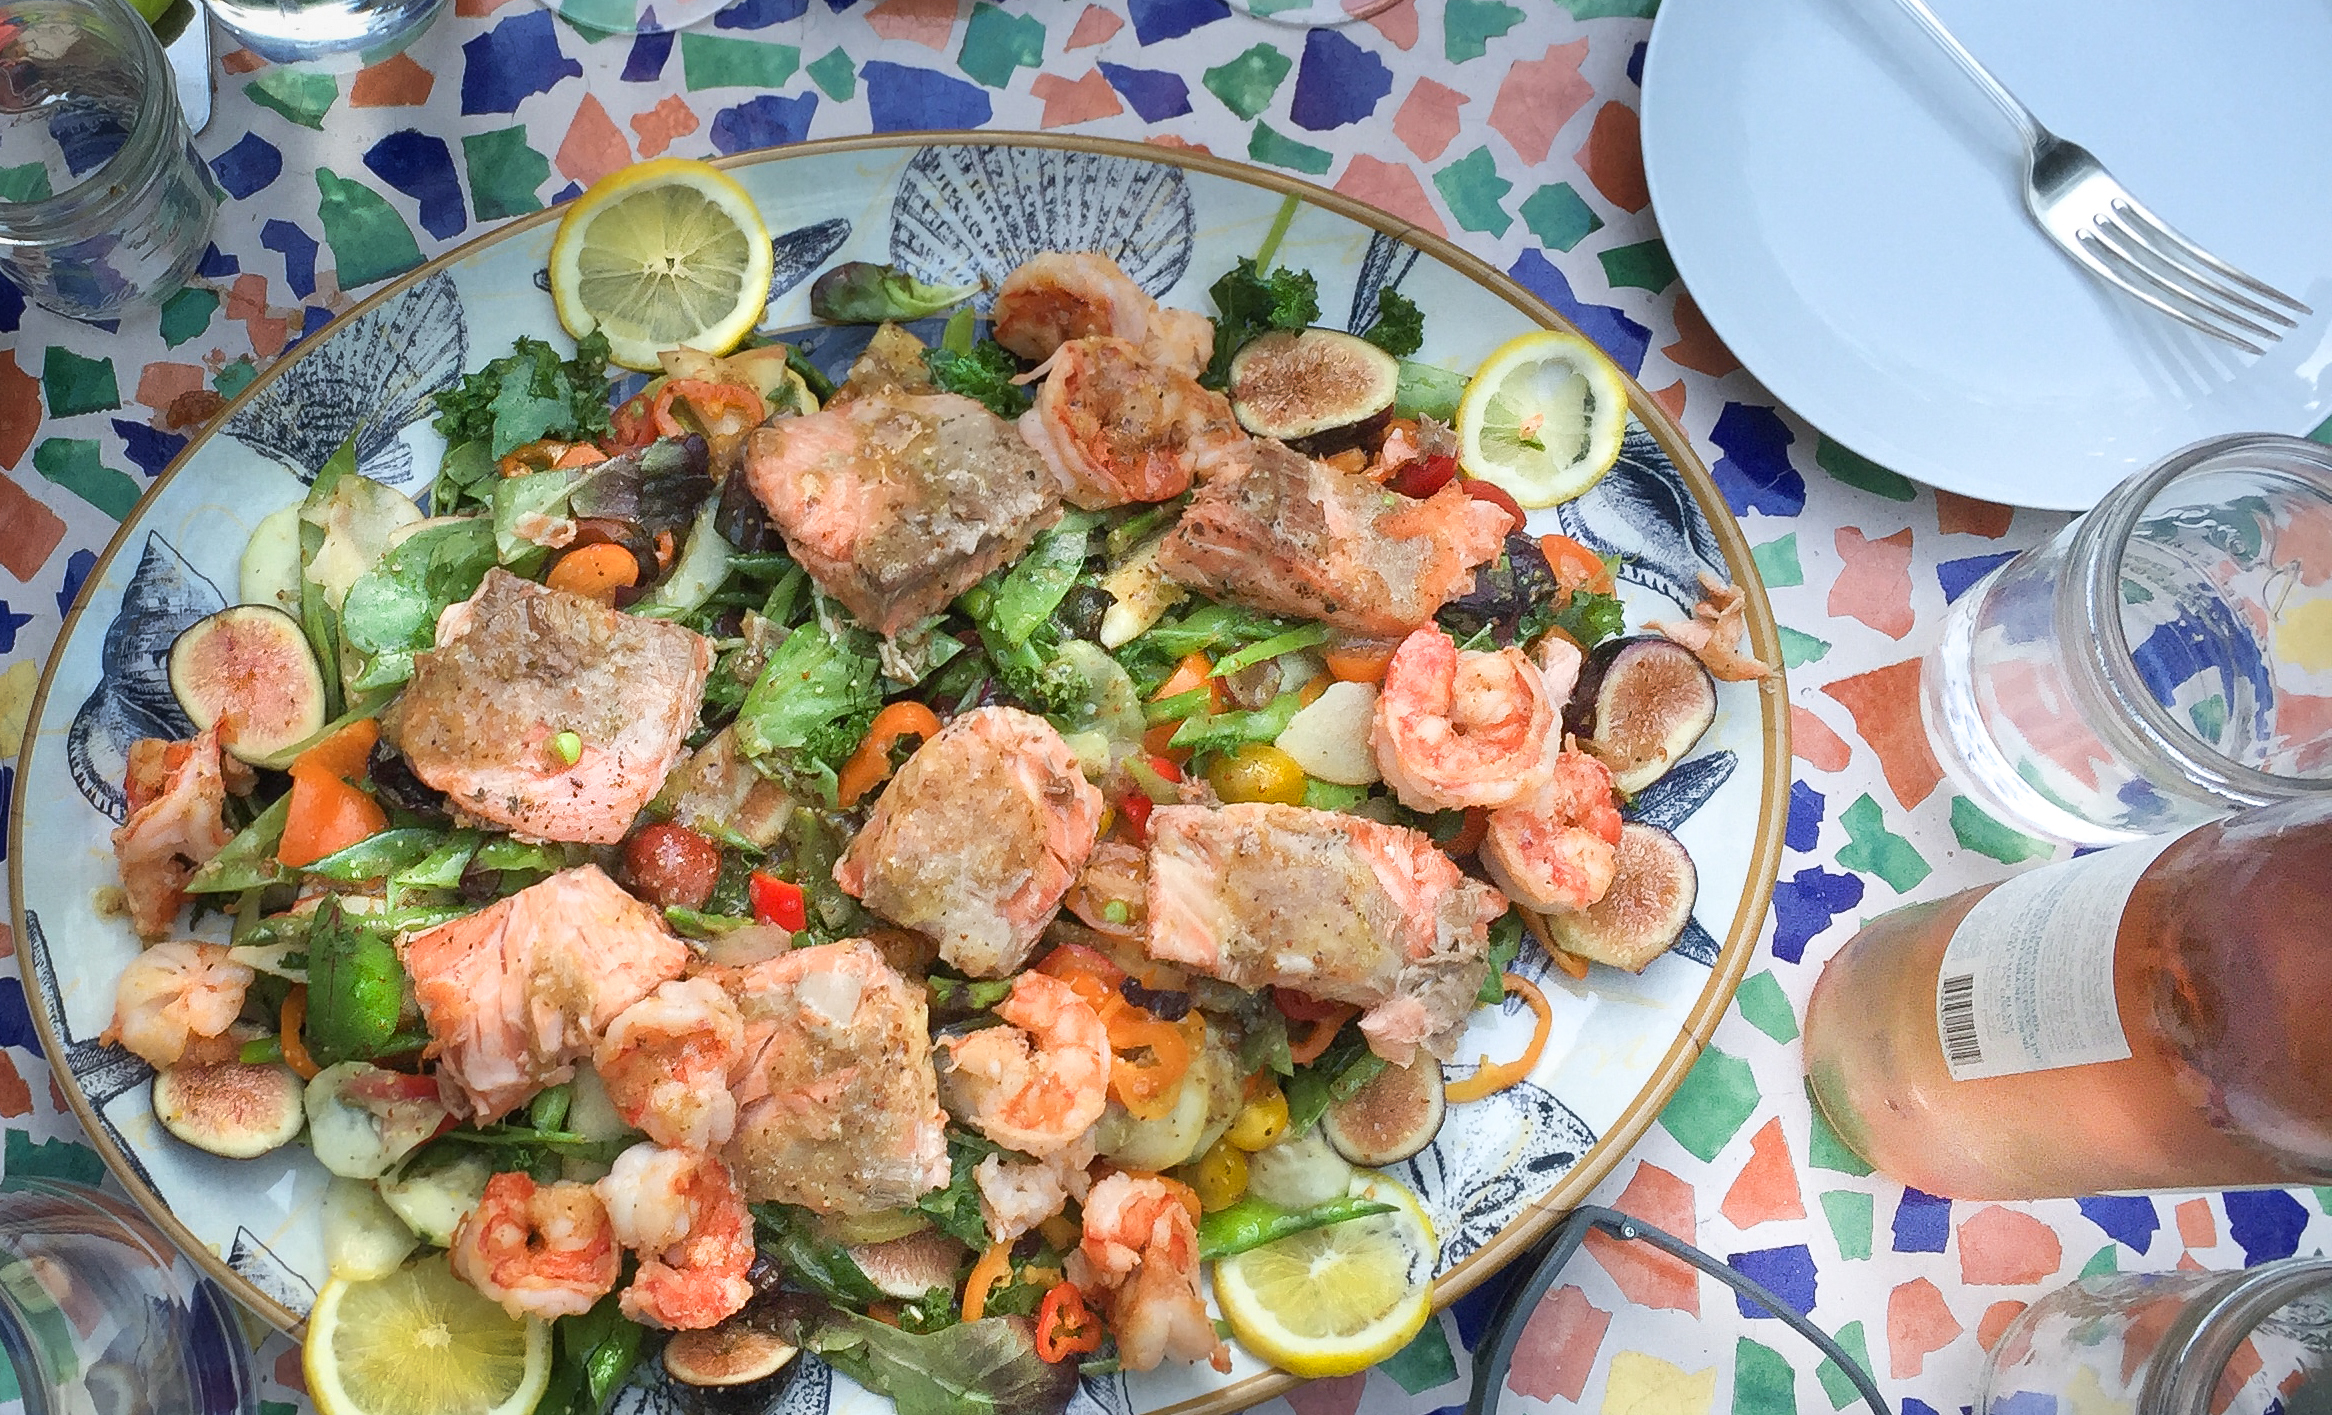 Salmon and Shrimp Salad takes advantage of fresh seafood and produce.